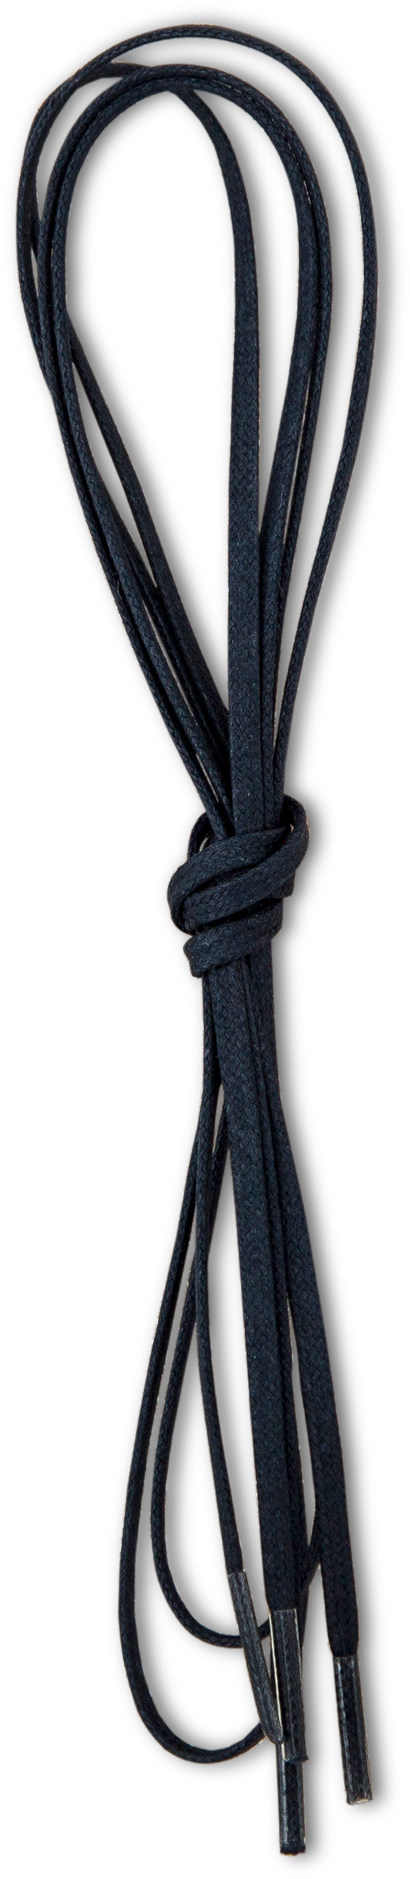 Black Shoelace Bundle PNG image